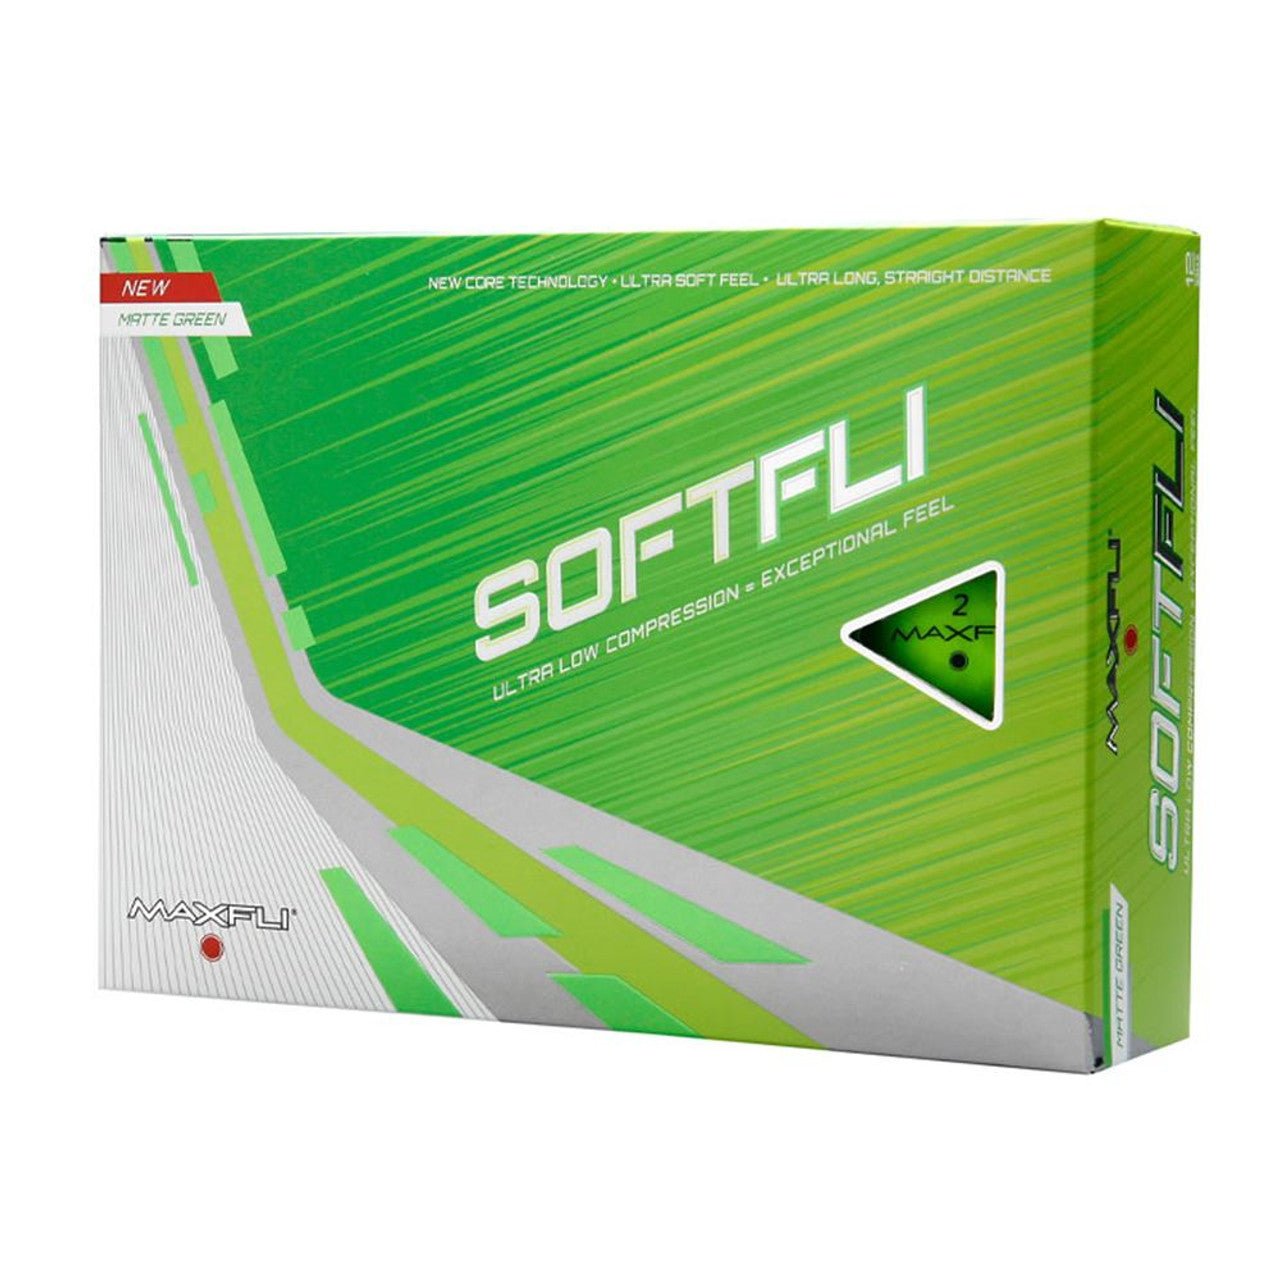 MAXFLI SOFTFLI MATTE GOLF BALLS - Grip On Golf & Pickleball Zone